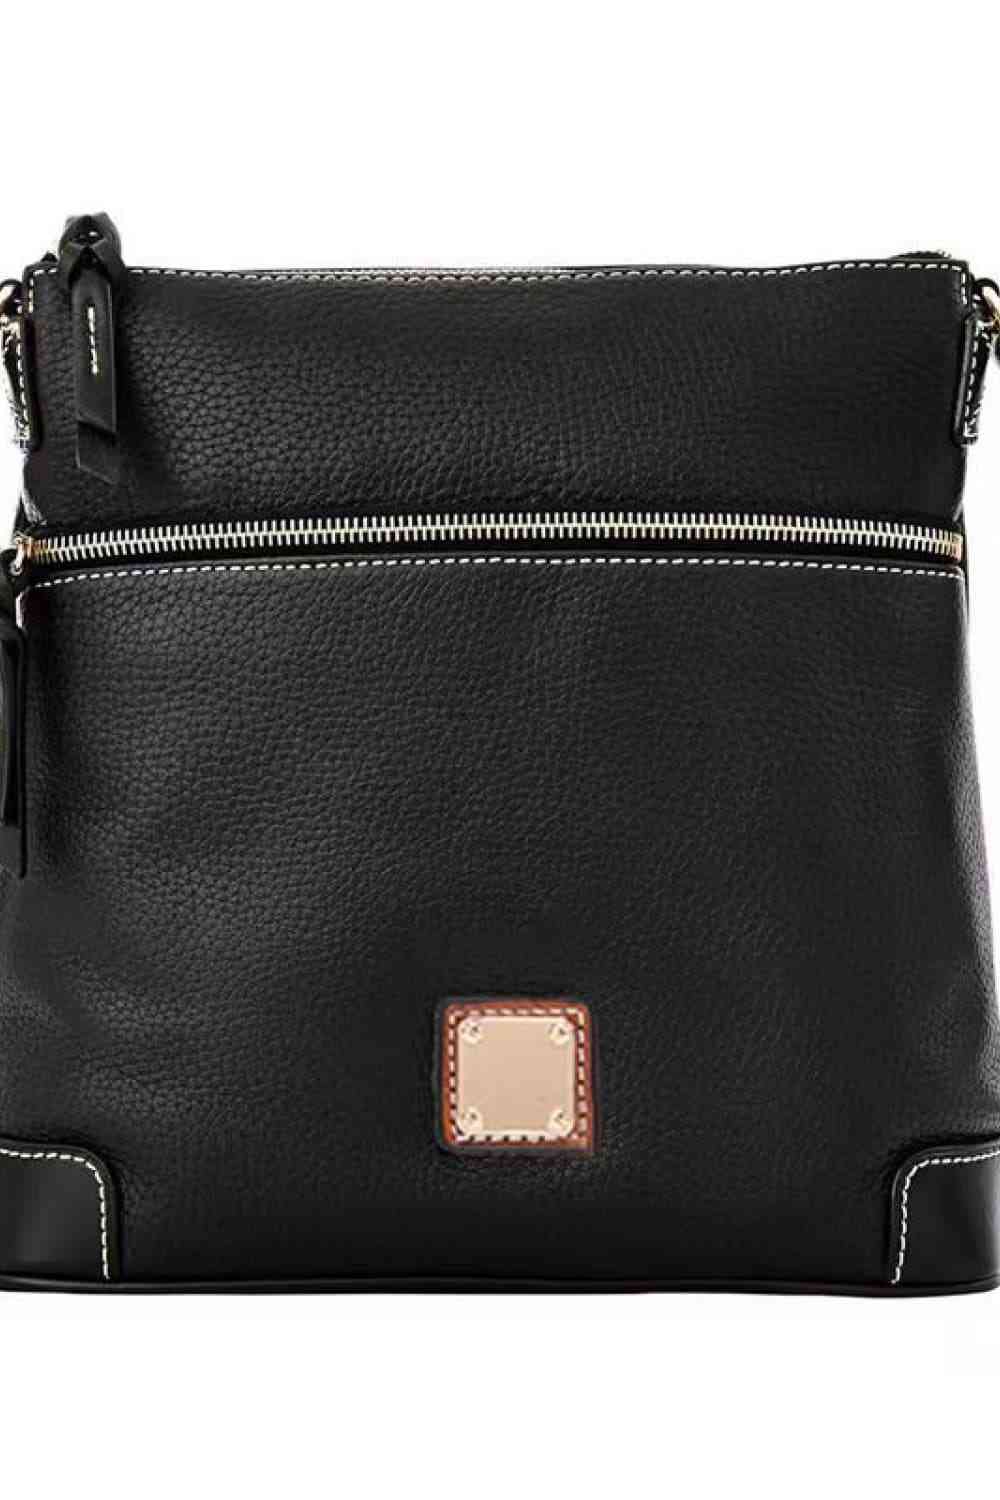 Square Vegan Leather Crossbody Bag Black / One Size